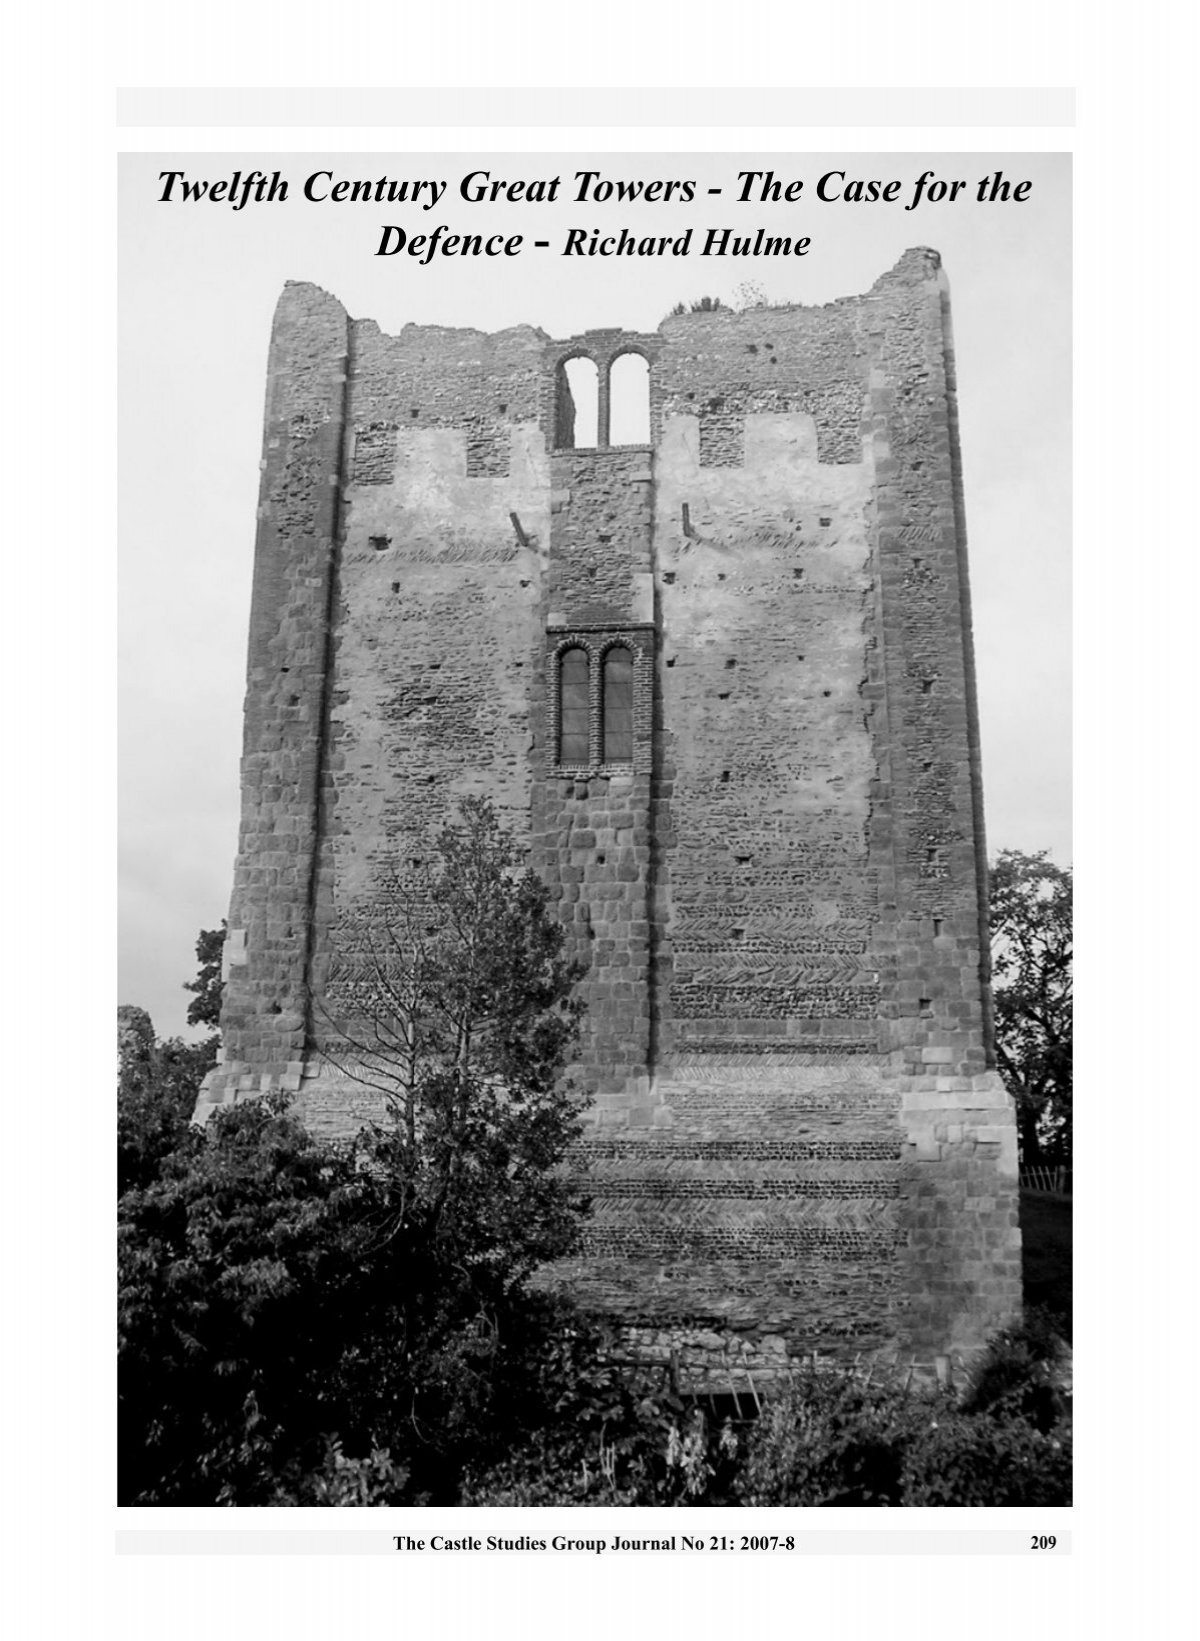 Twelfth Century Great Towers - Castle Studies Group